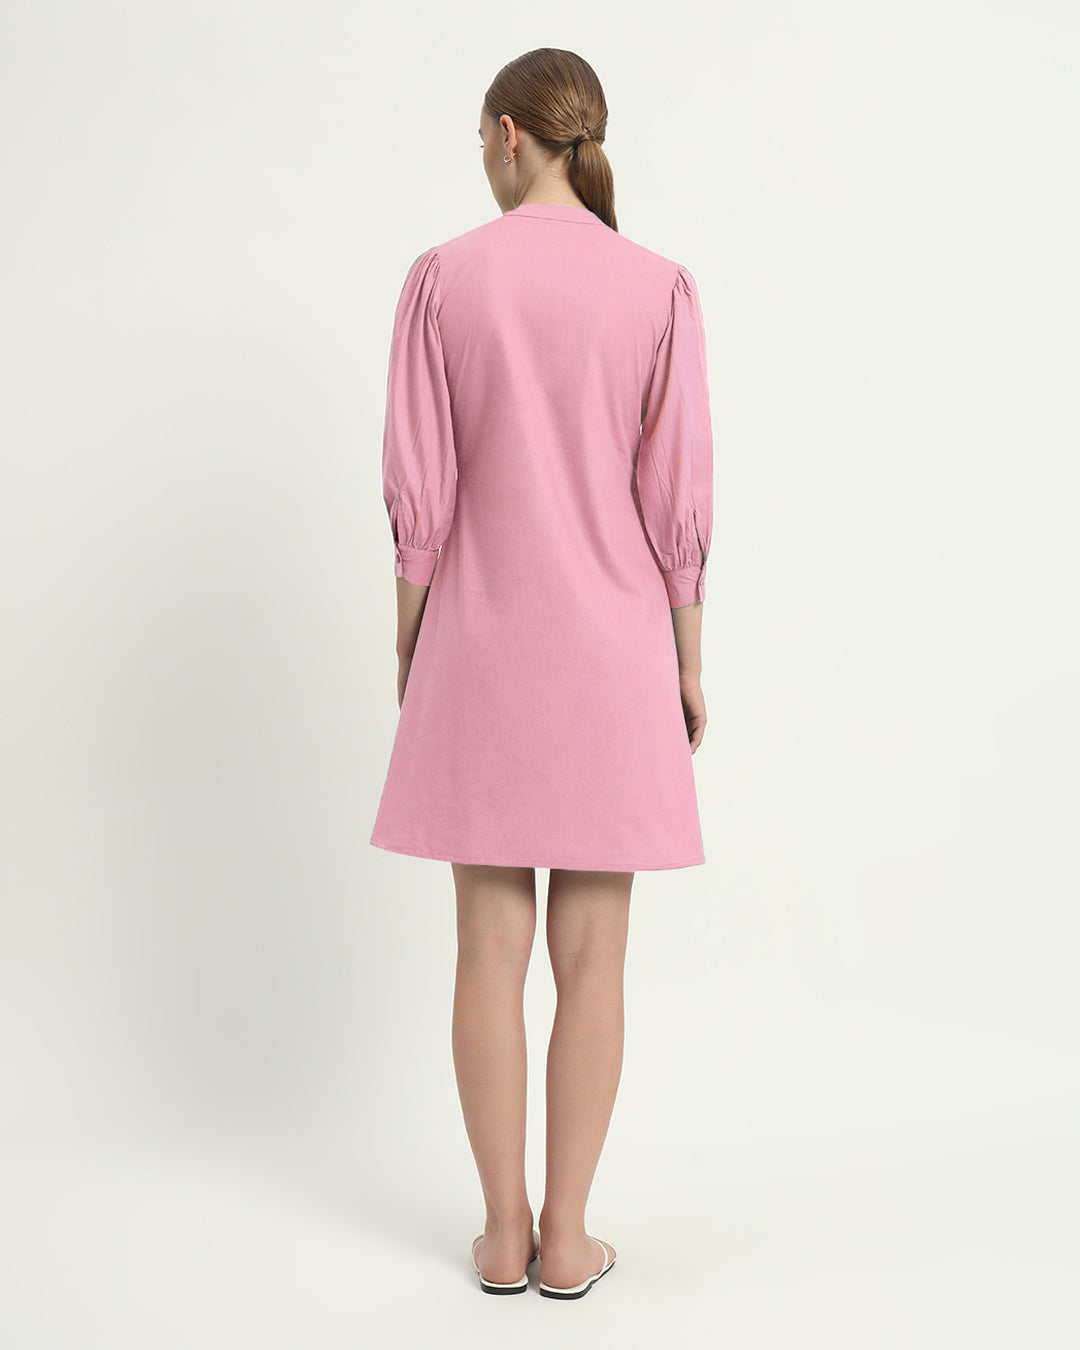 The Fondant Pink Roslyn Cotton Dress